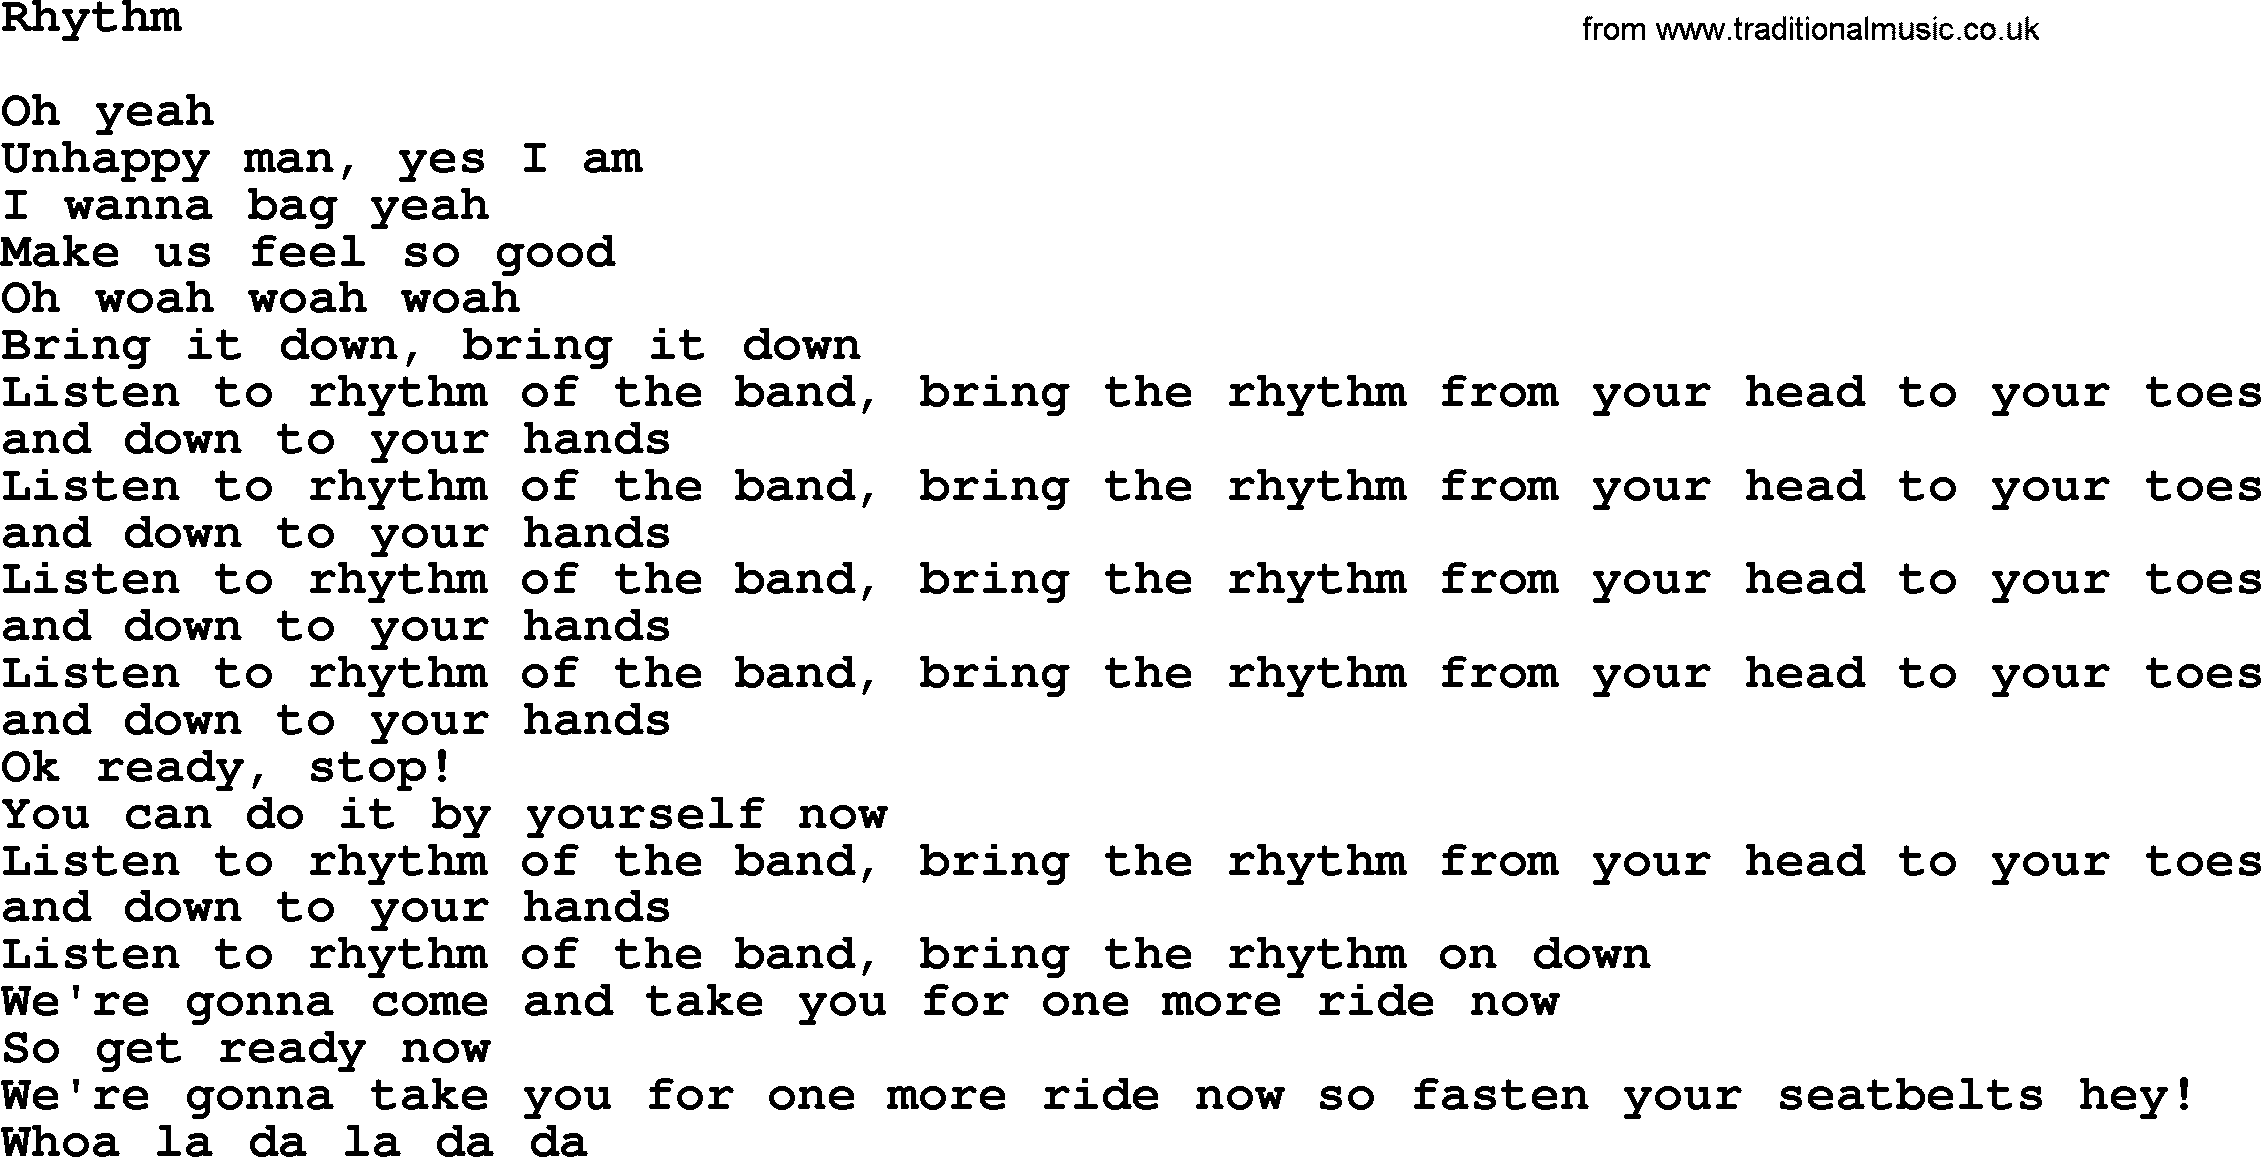 Bruce Springsteen song: Rhythm lyrics